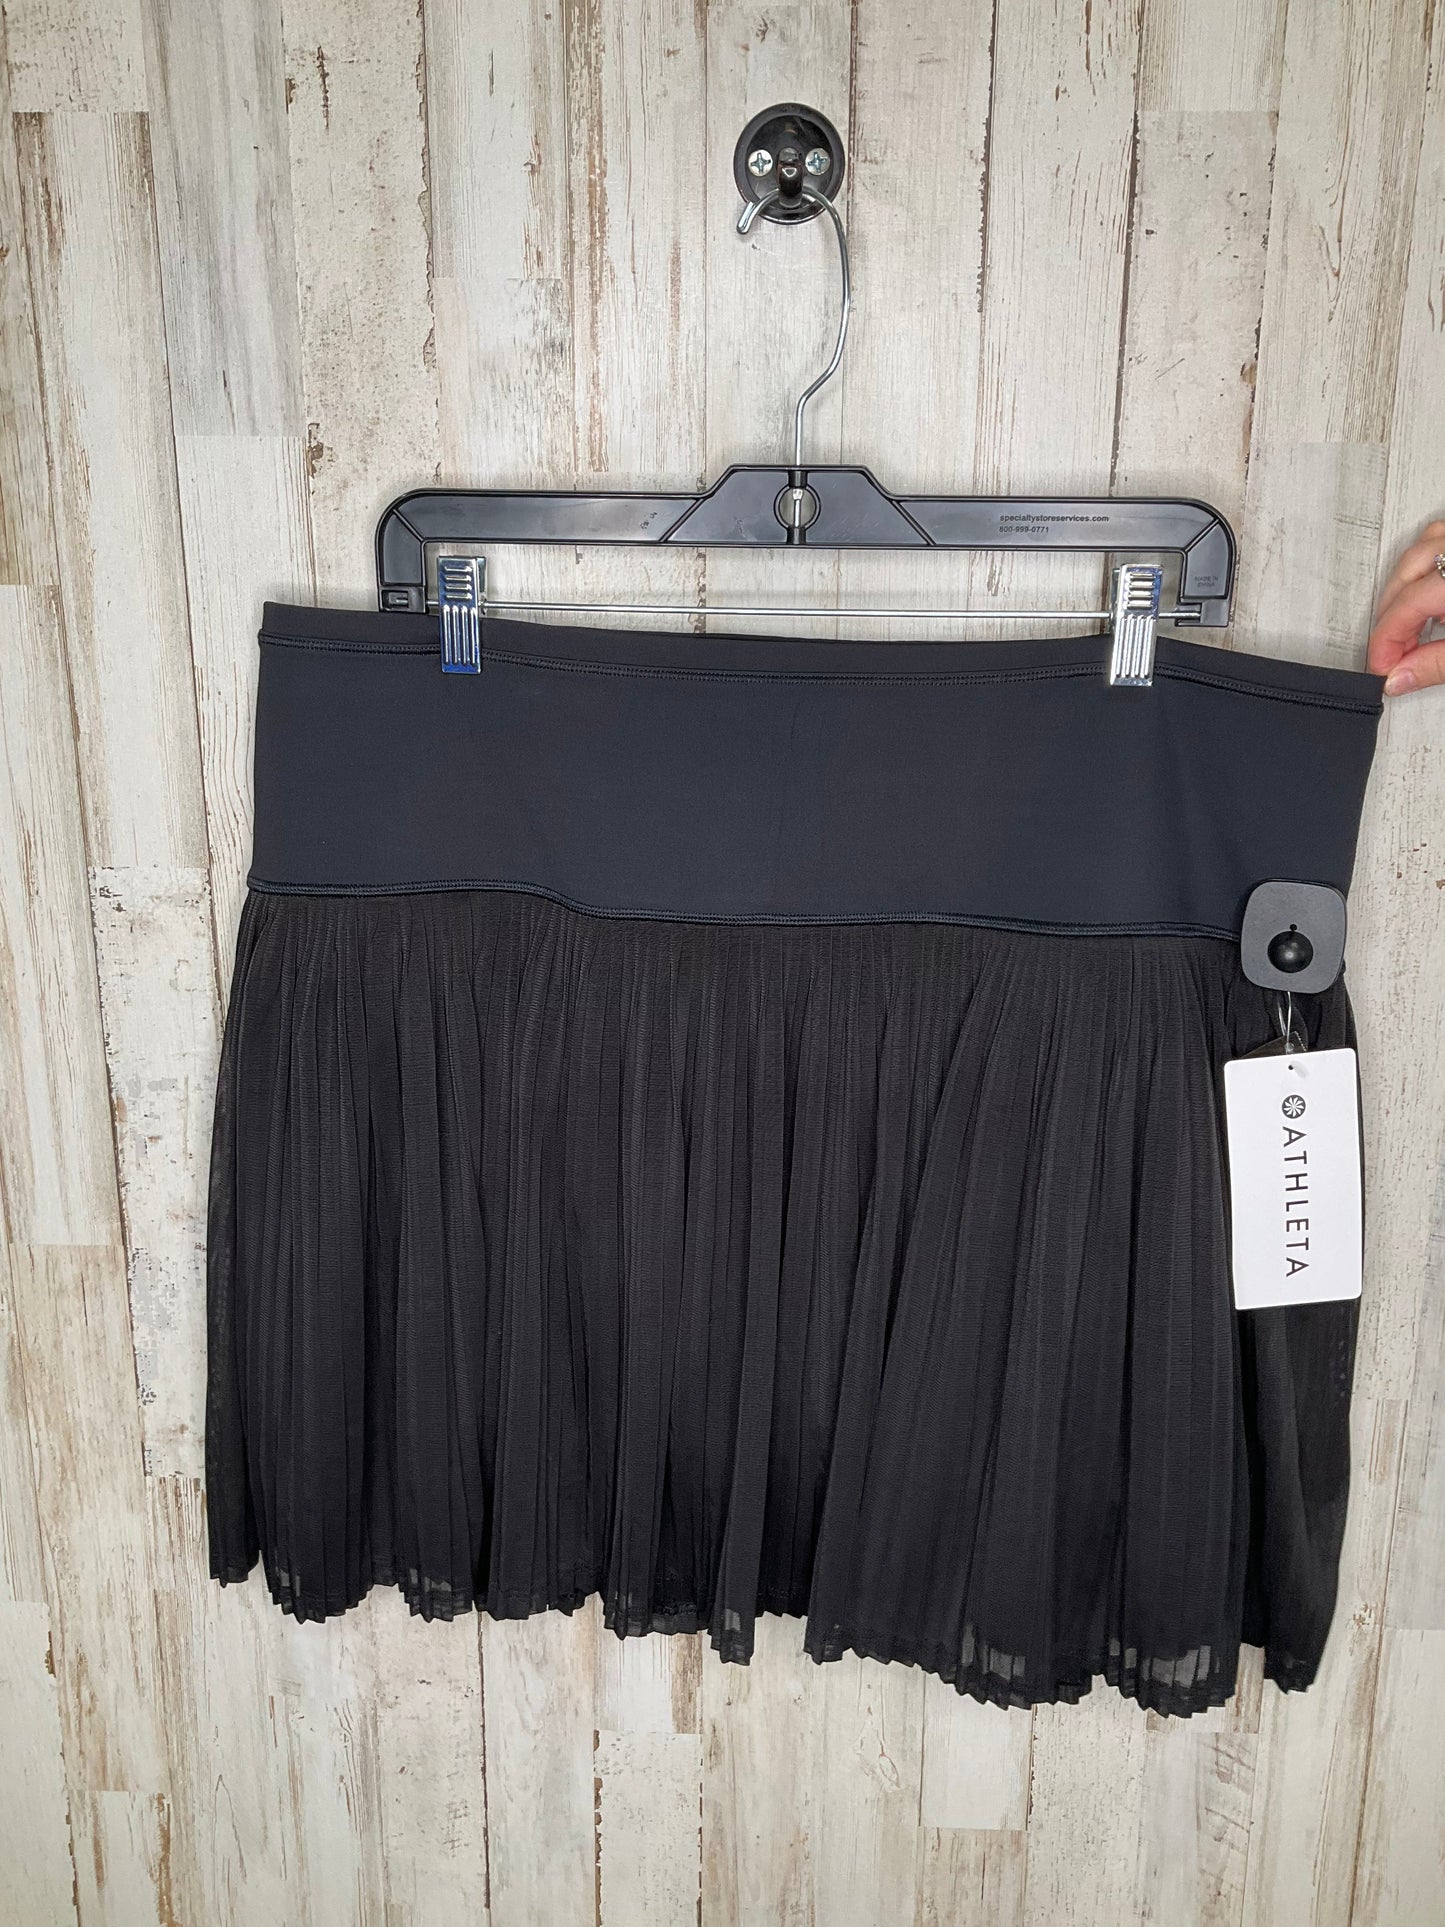 Black Athletic Skirt Athleta, Size 2x